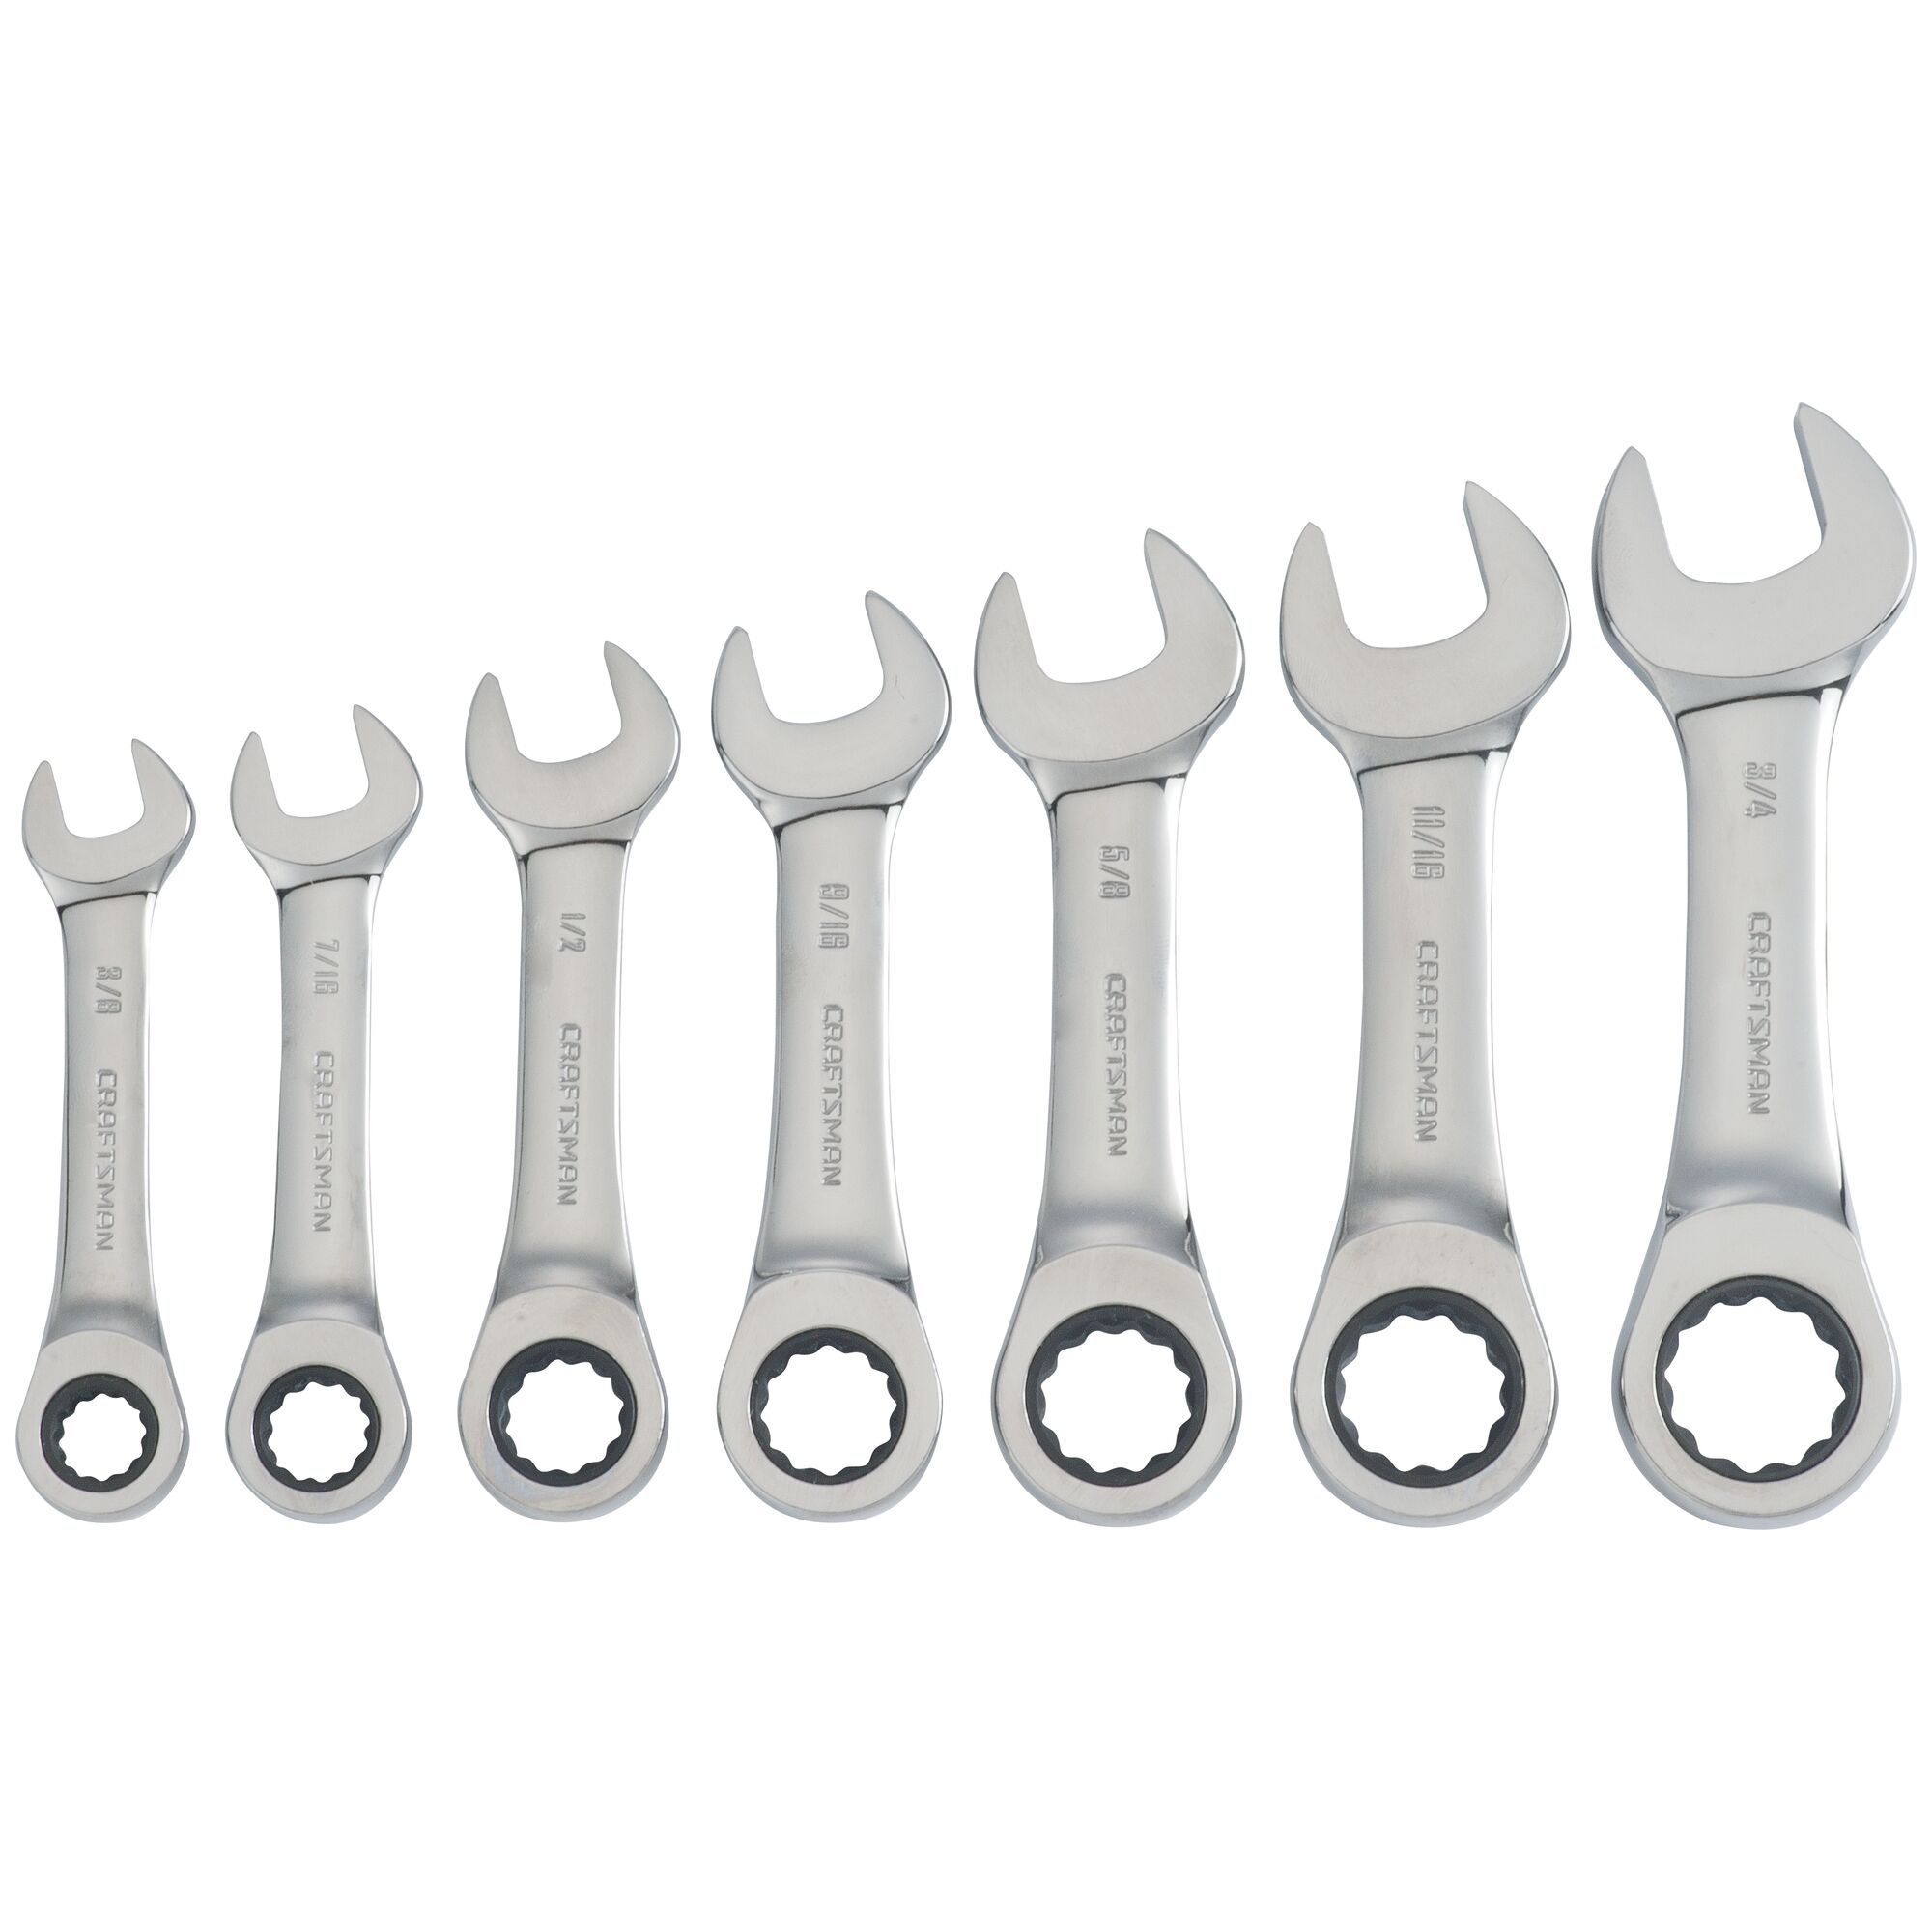 7 pc. SAE Stubby Ratcheting Wrench Set | CRAFTSMAN